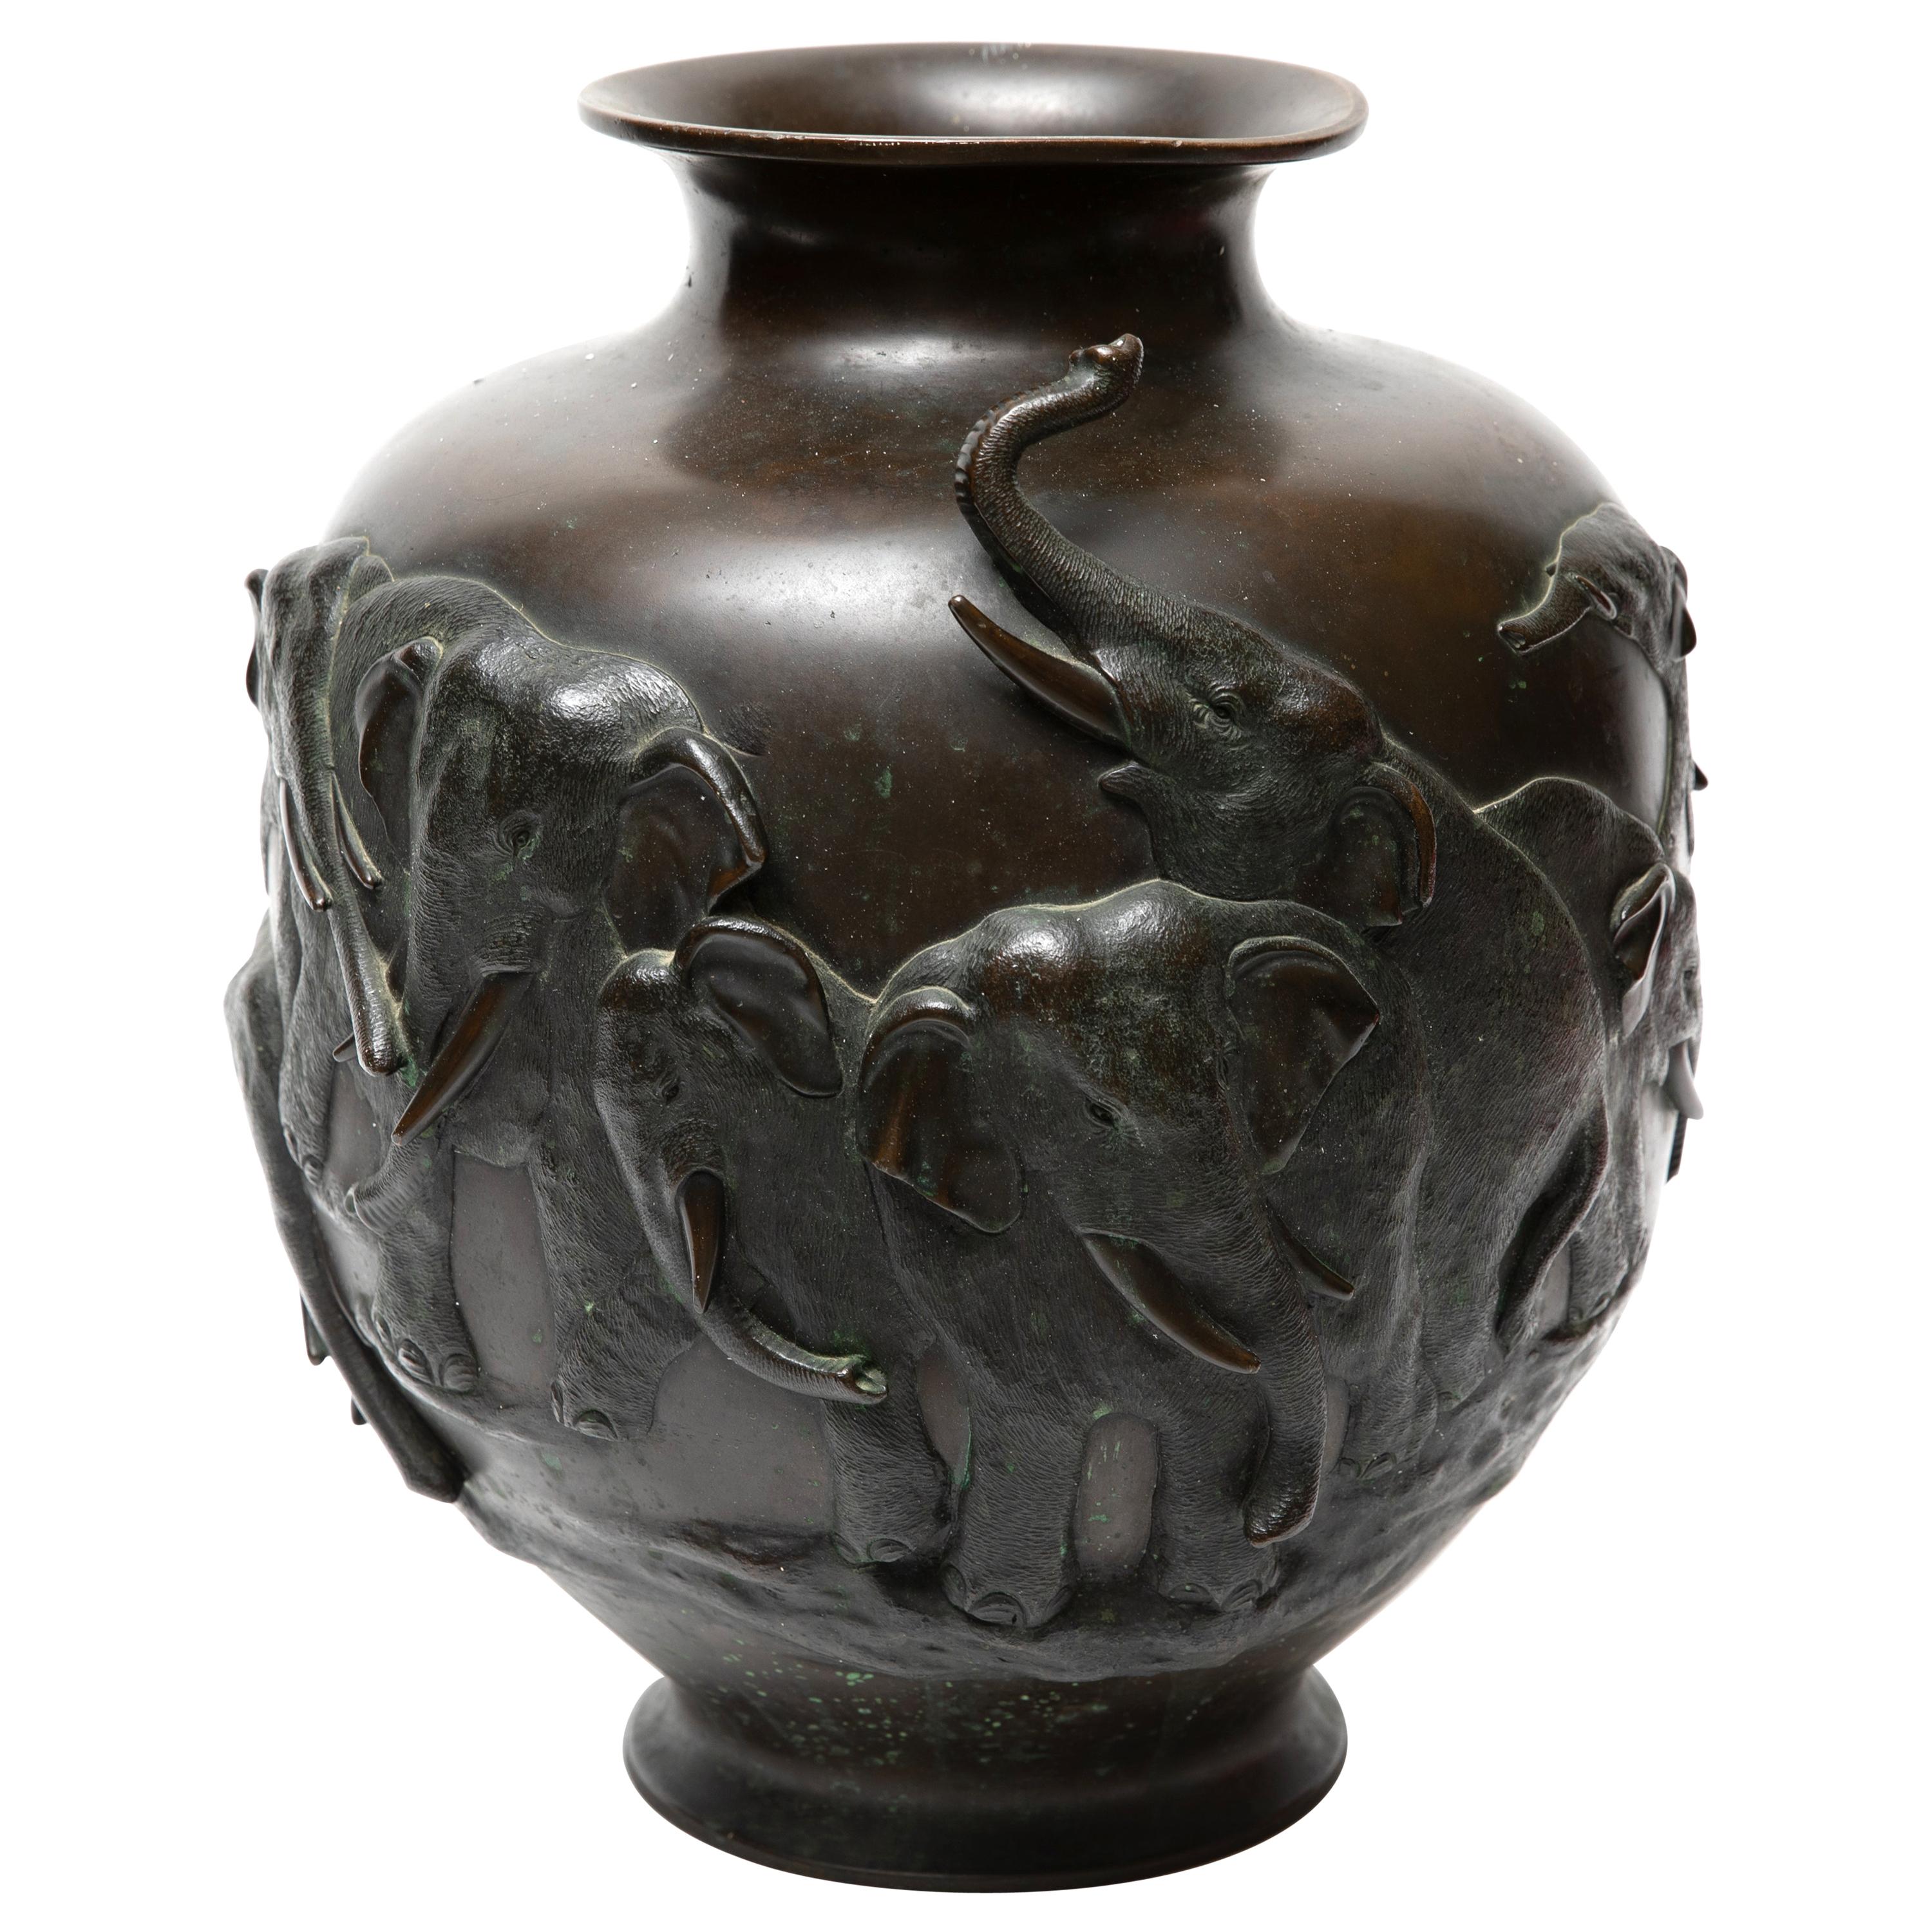 Impressive Meiji Japanese Bronze Baluster Jar